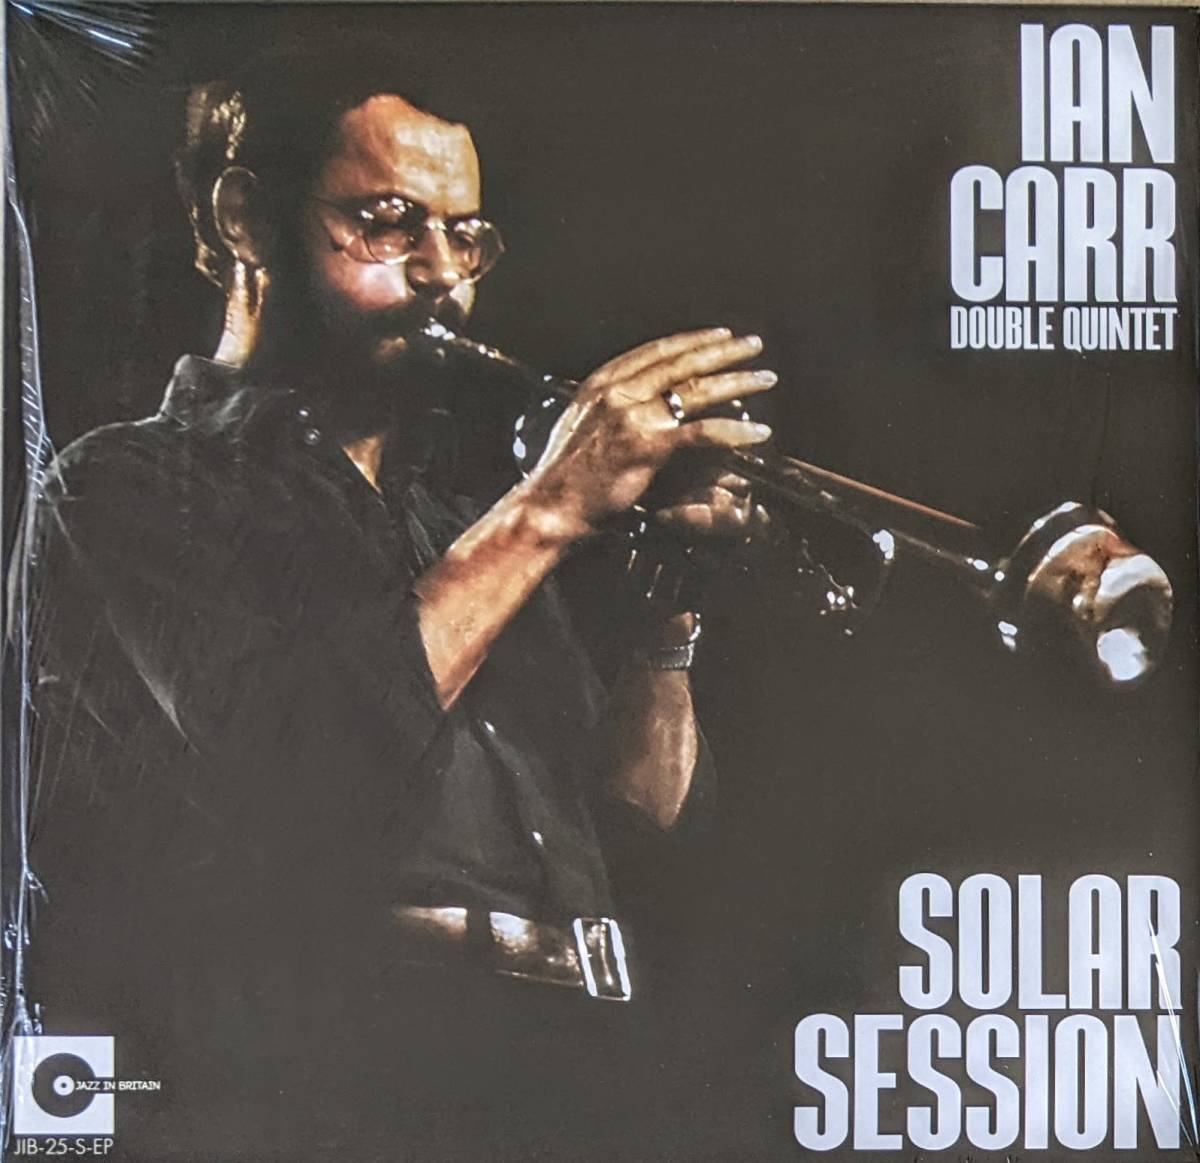 Ian Carr イアン・カー (=Nucleus) Double Quintet - Solar Session 500枚限定10インチ・アナログ・レコード